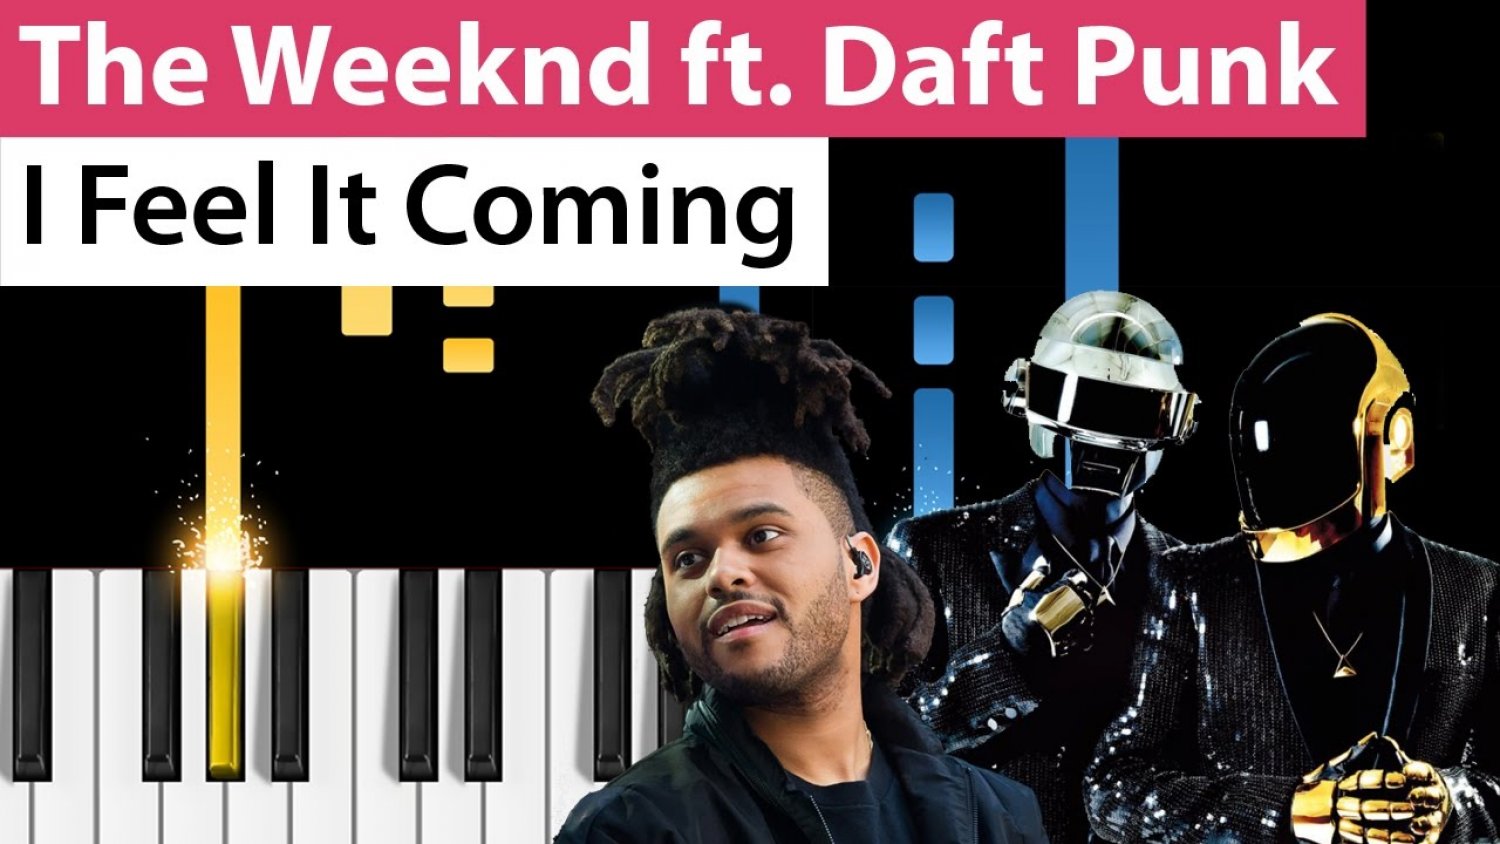 Feeling coming down. Daft Punk the Weeknd. Daft Punk i feel it coming. I feel it coming the Weeknd. The Weeknd i feel it coming ft. Daft Punk.